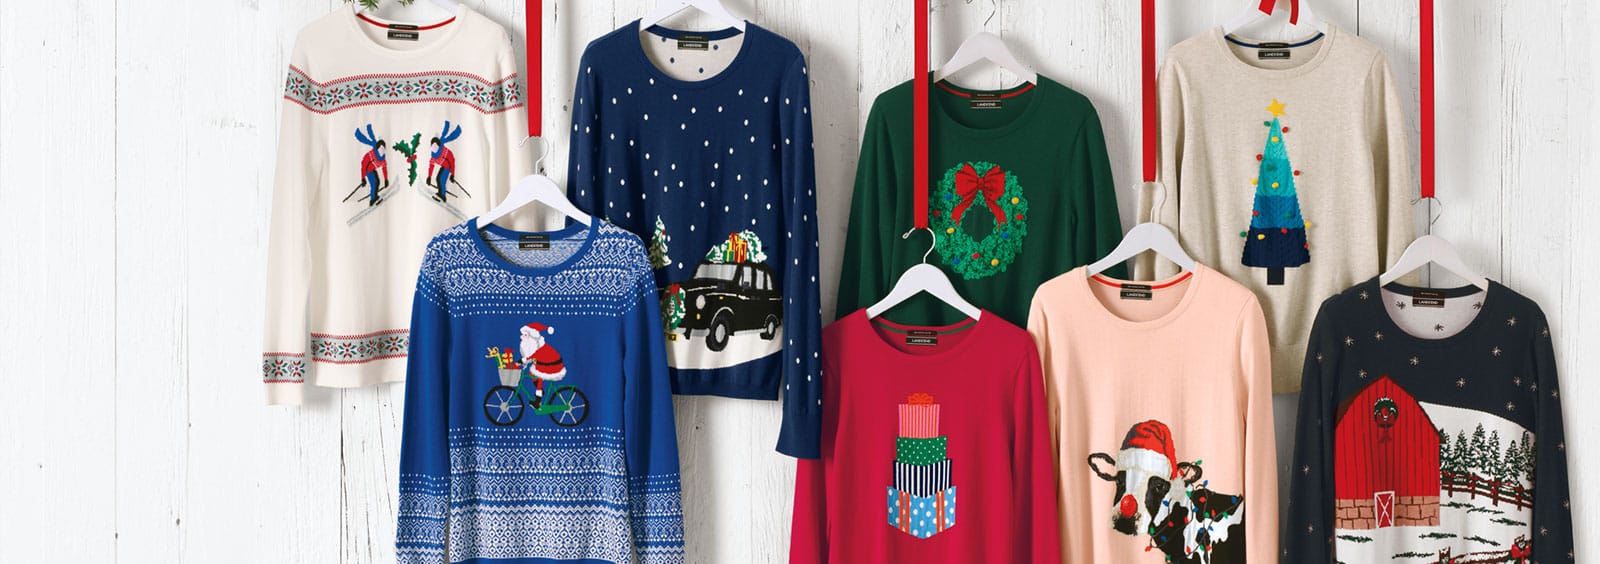 Ten favorite Christmas sweaters